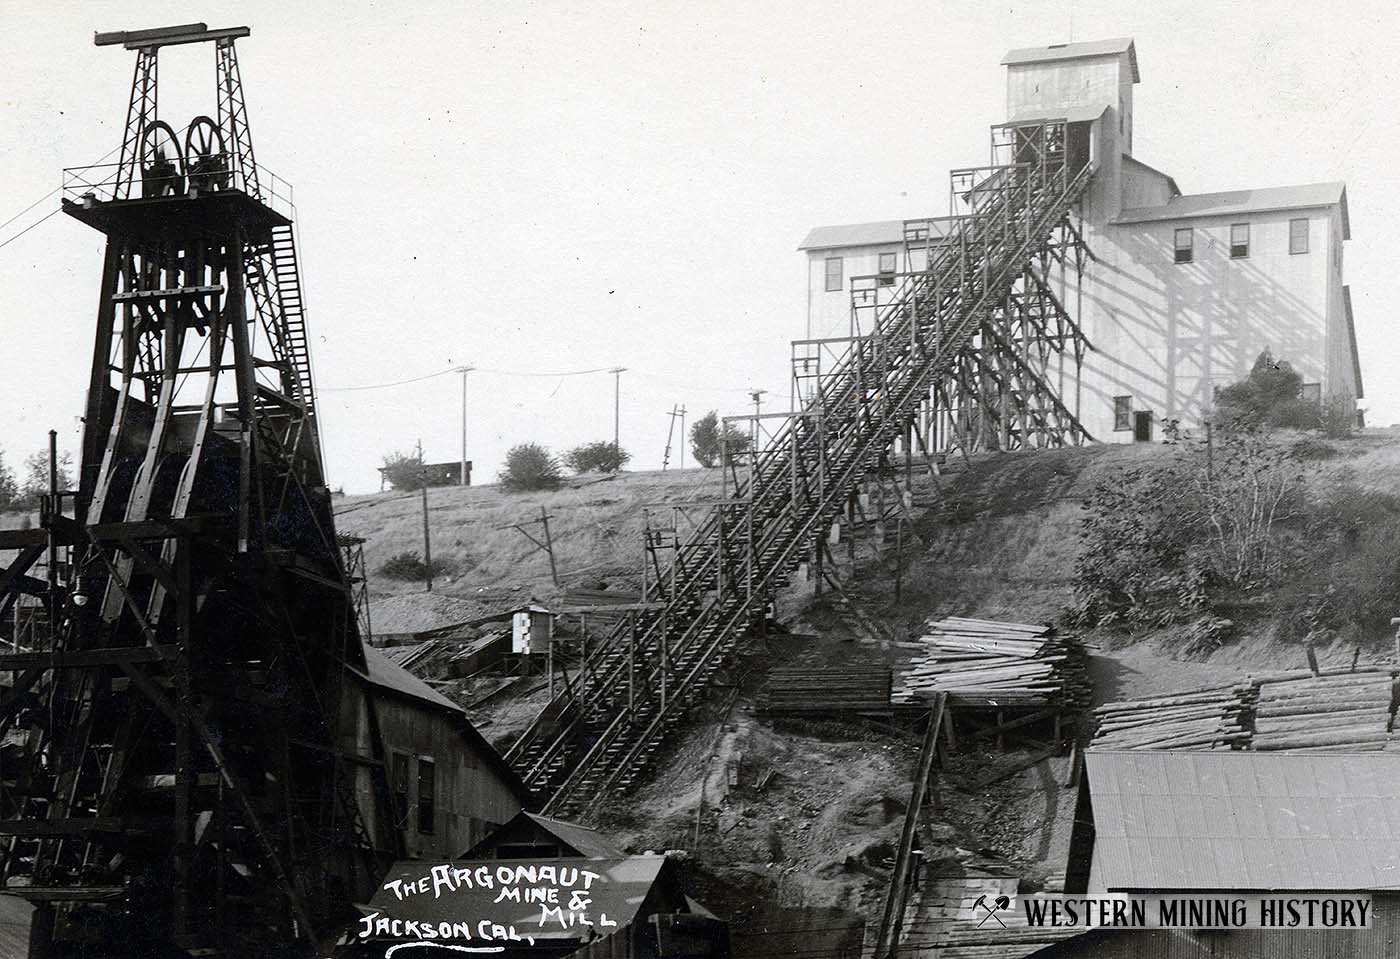 Argonaut Mine - Jackson, California ca. 1920